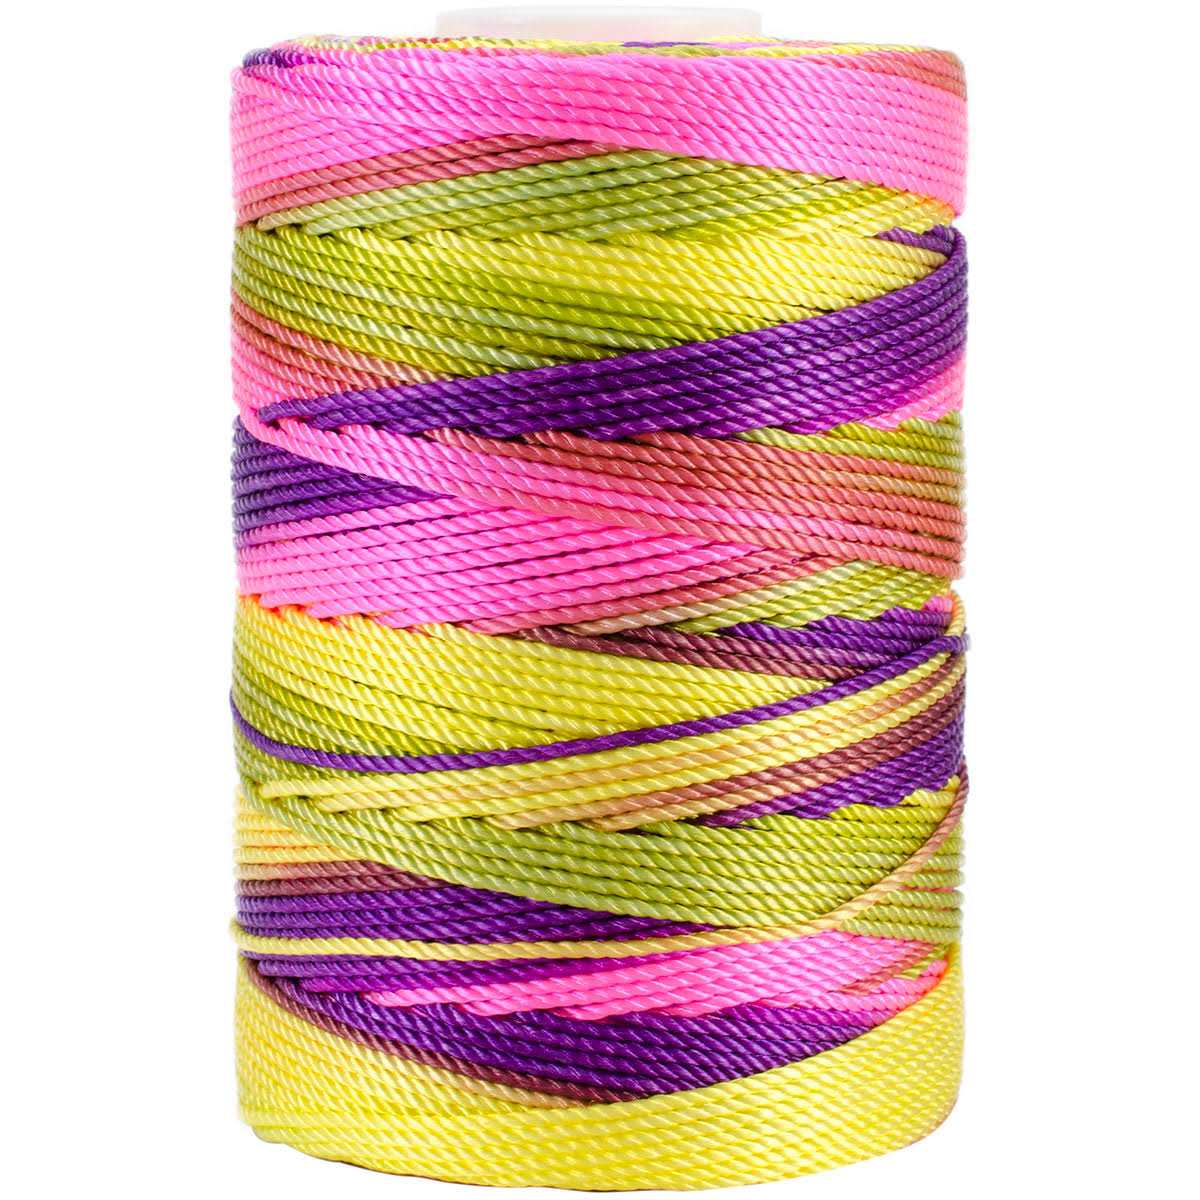 Iris Nylon Crochet Thread - Bright Pastel Mix, 197yd